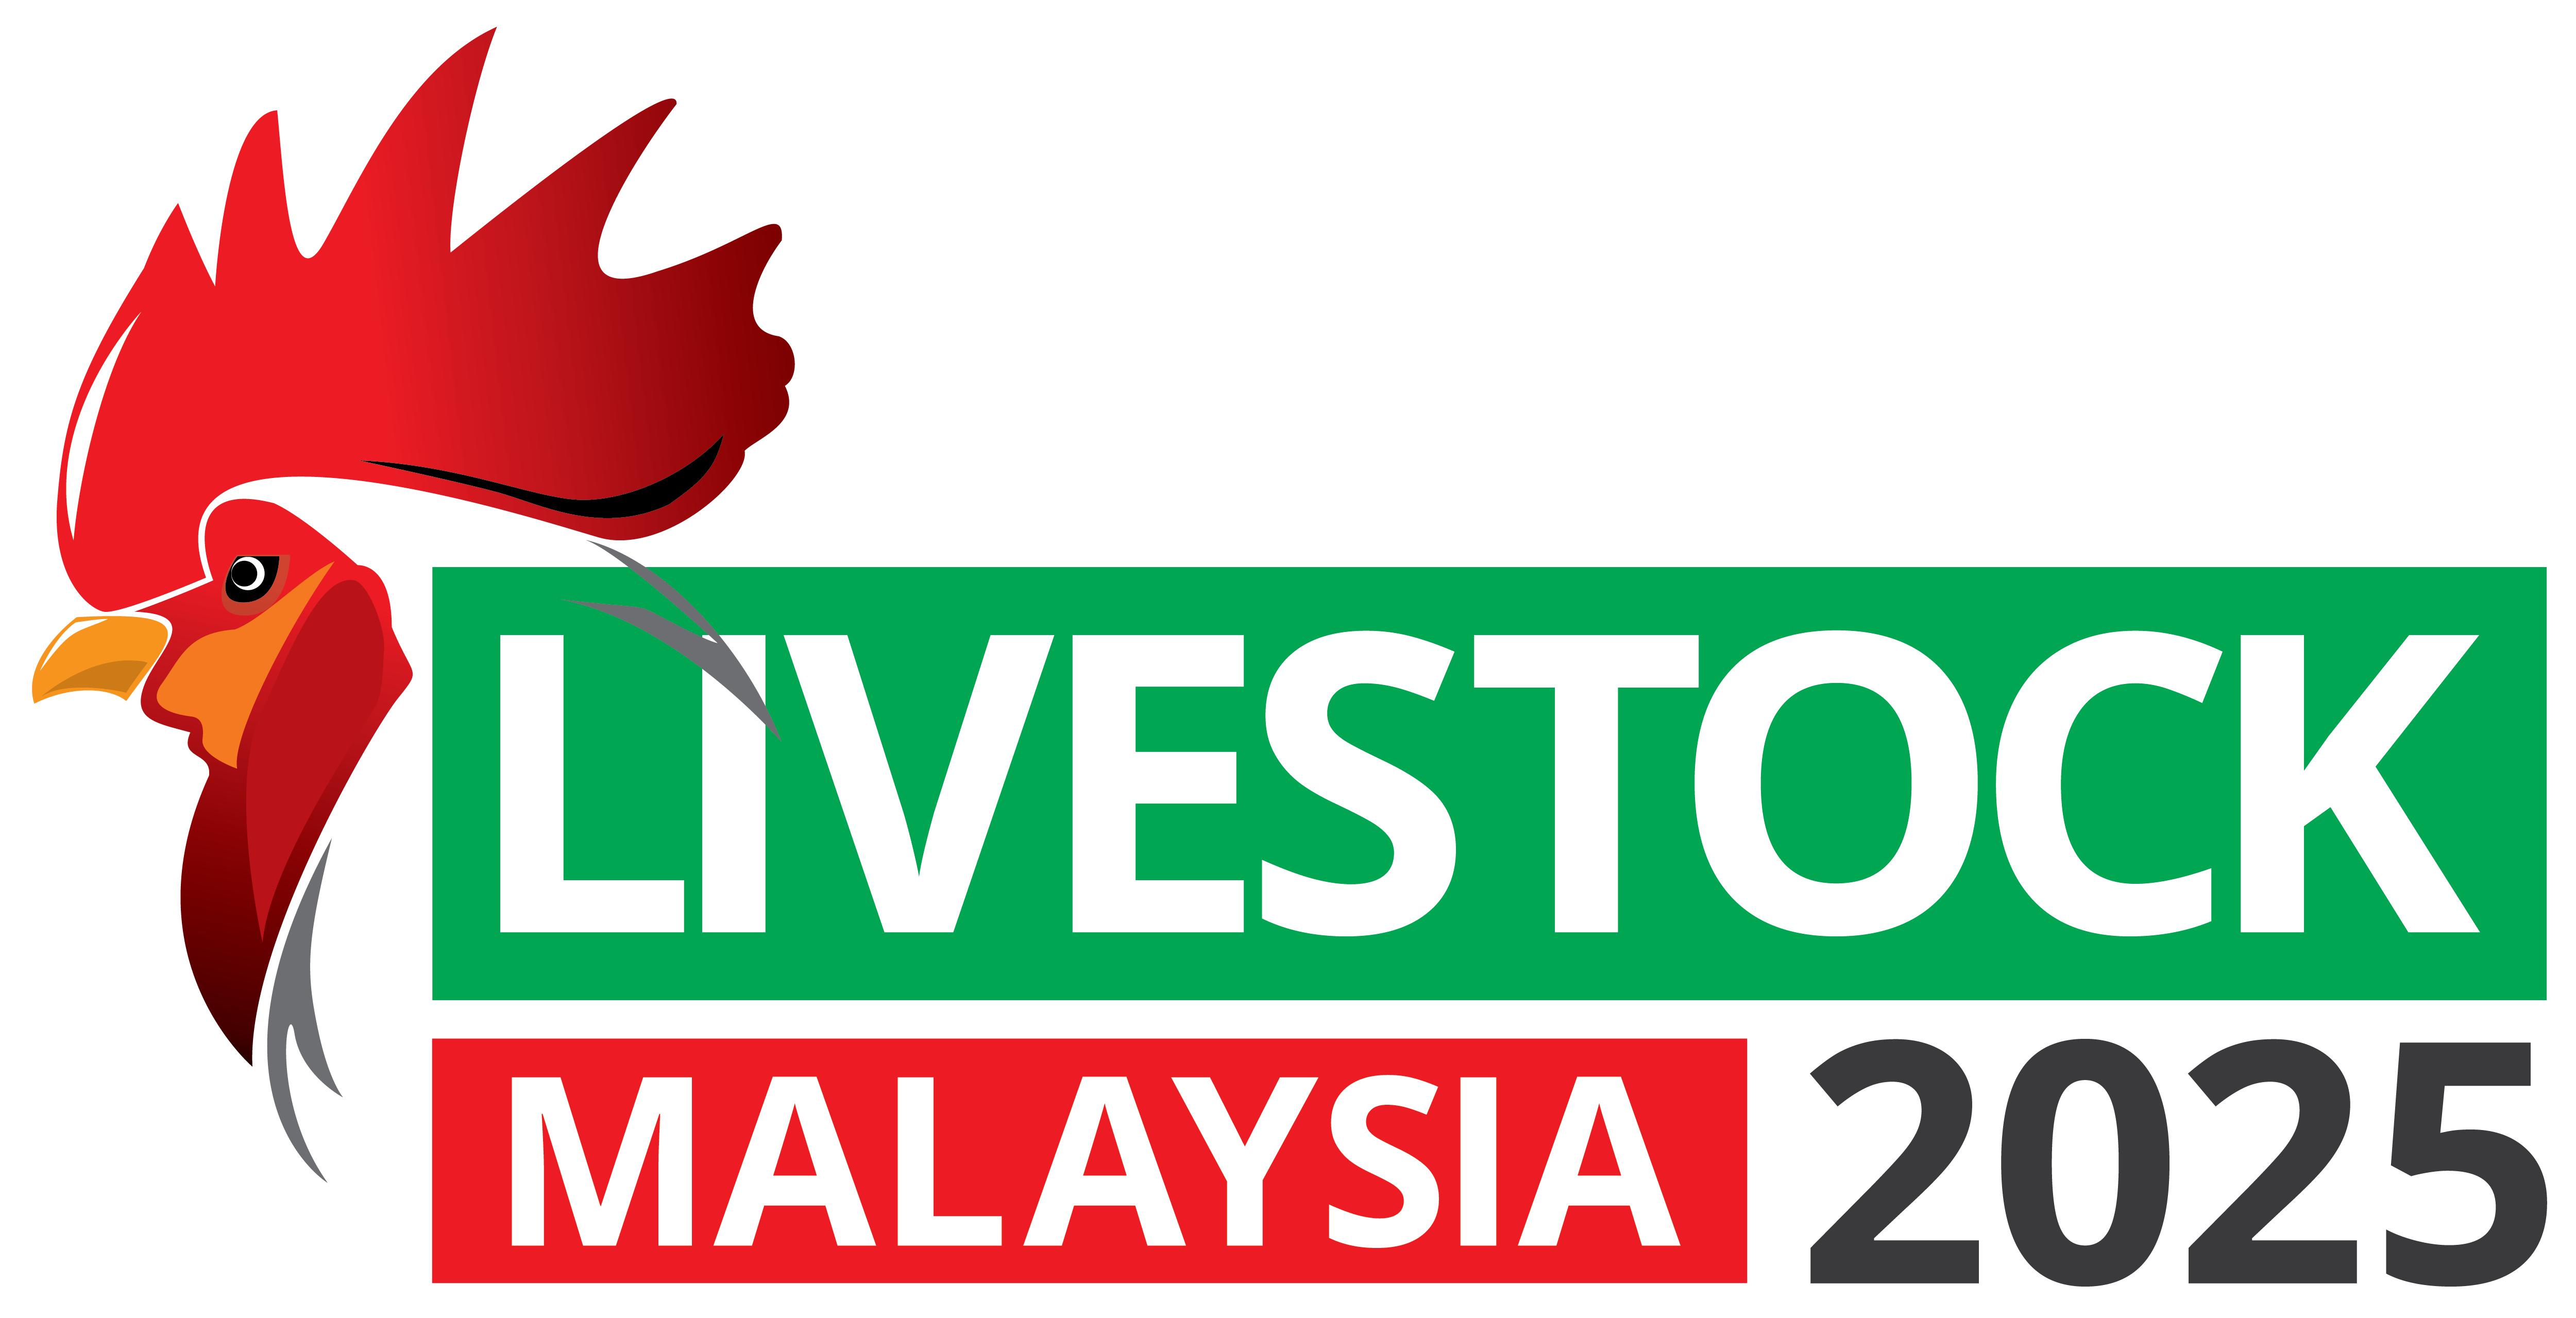 Livestock Malaysia 2025